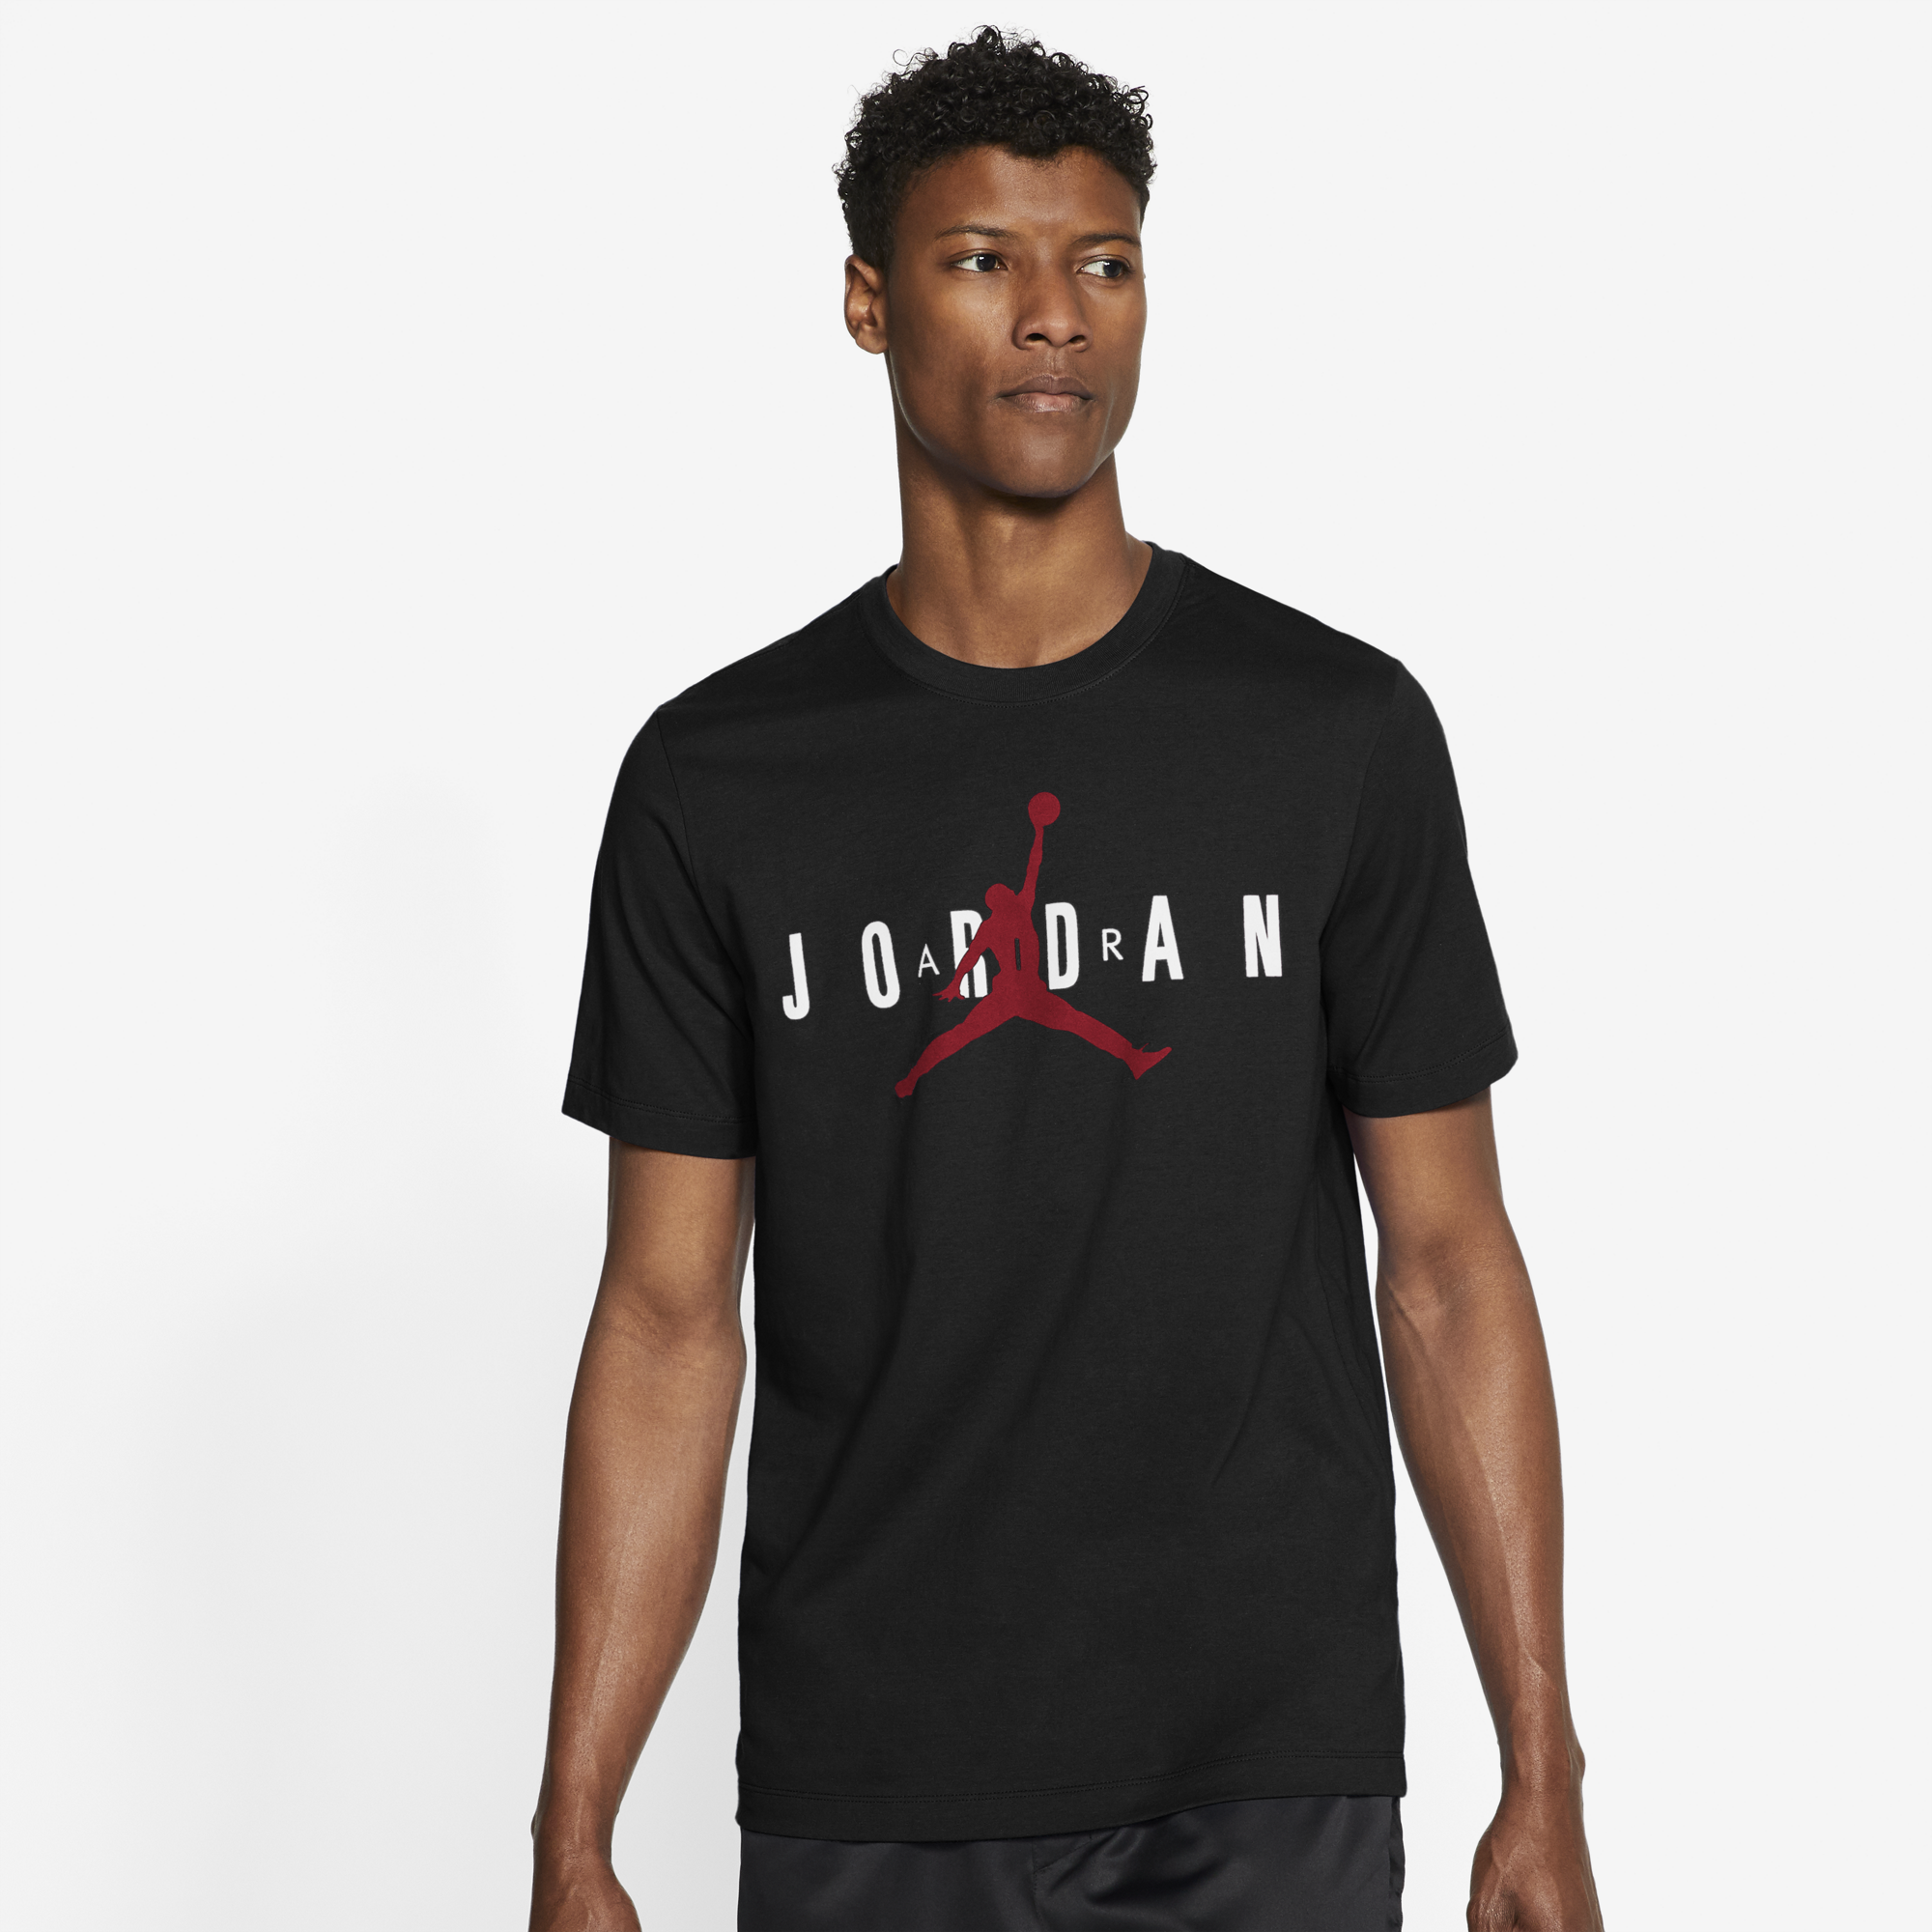 black and teal jordan shirt